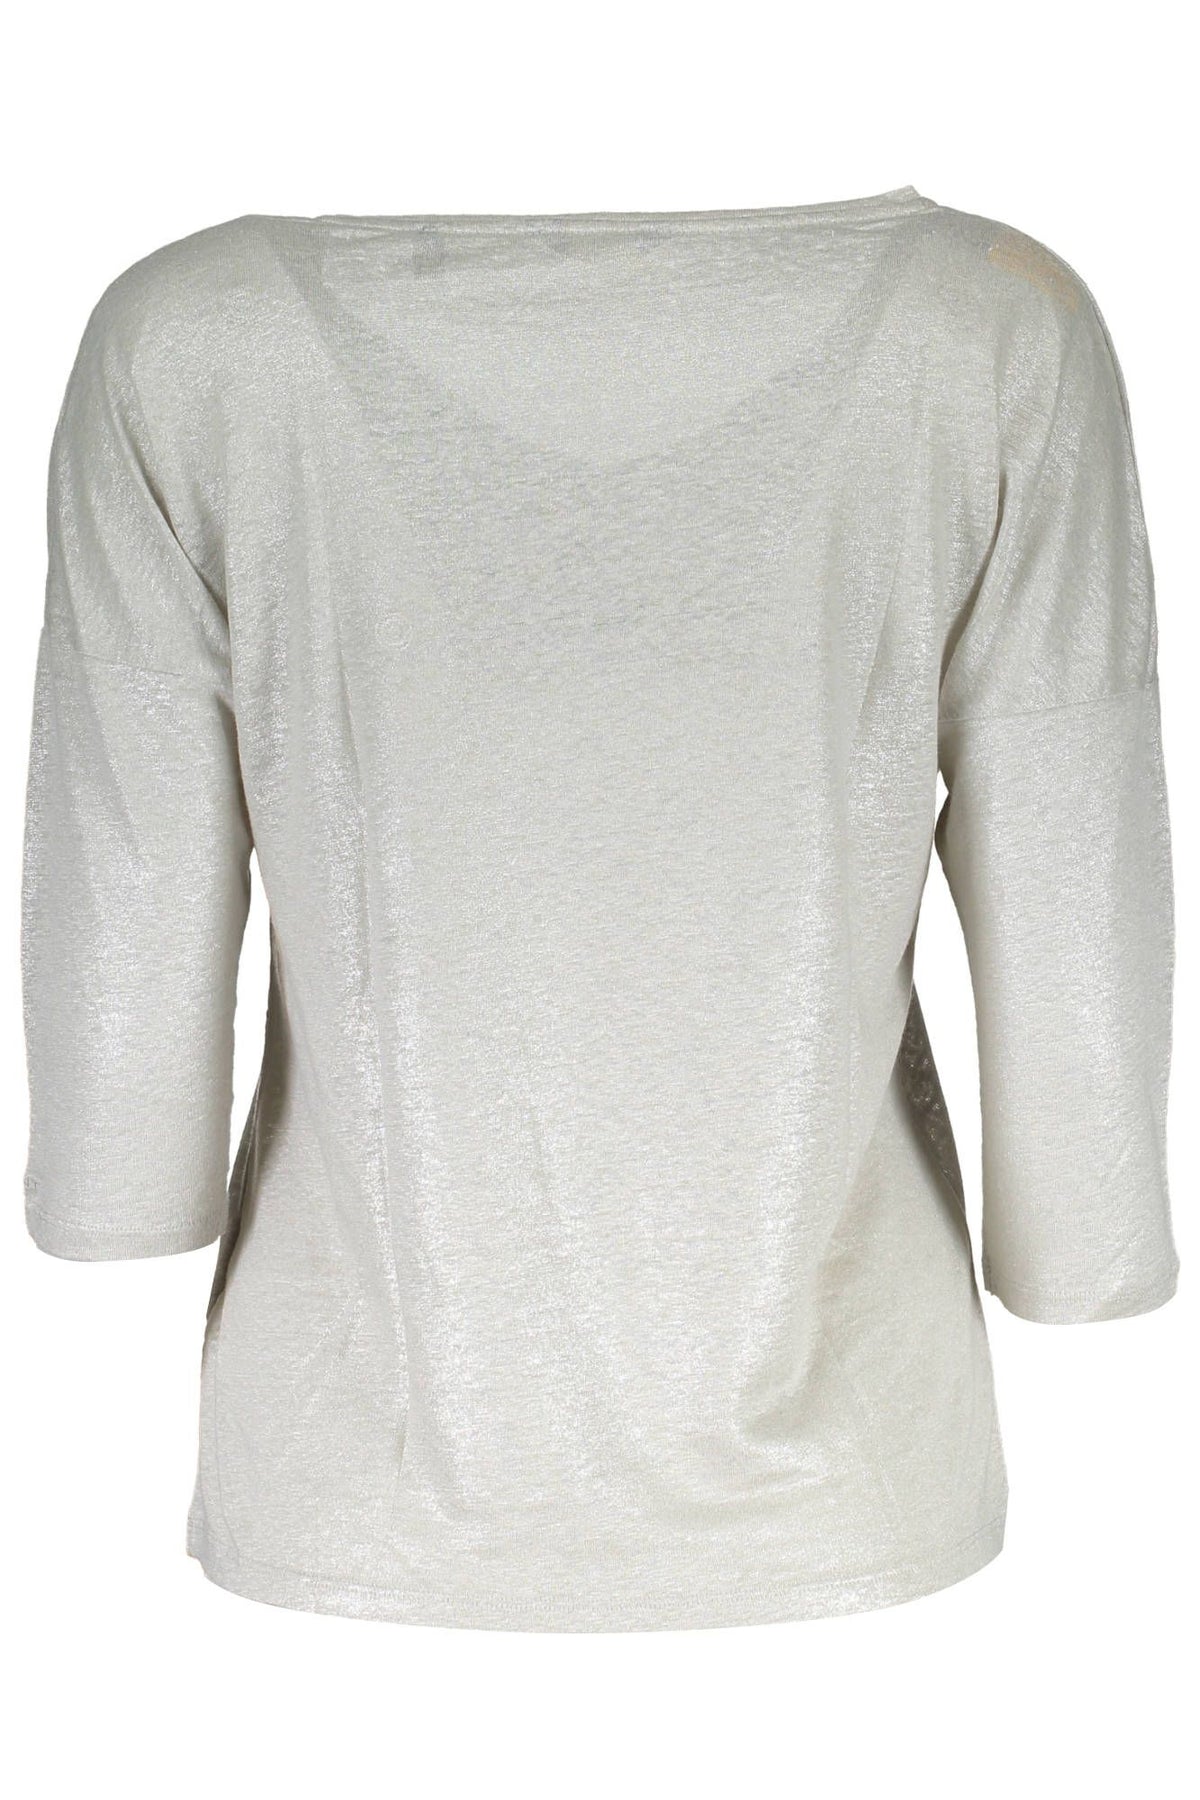 Gant Elegant Gray V-Neck Sweater with 3/4 Sleeves